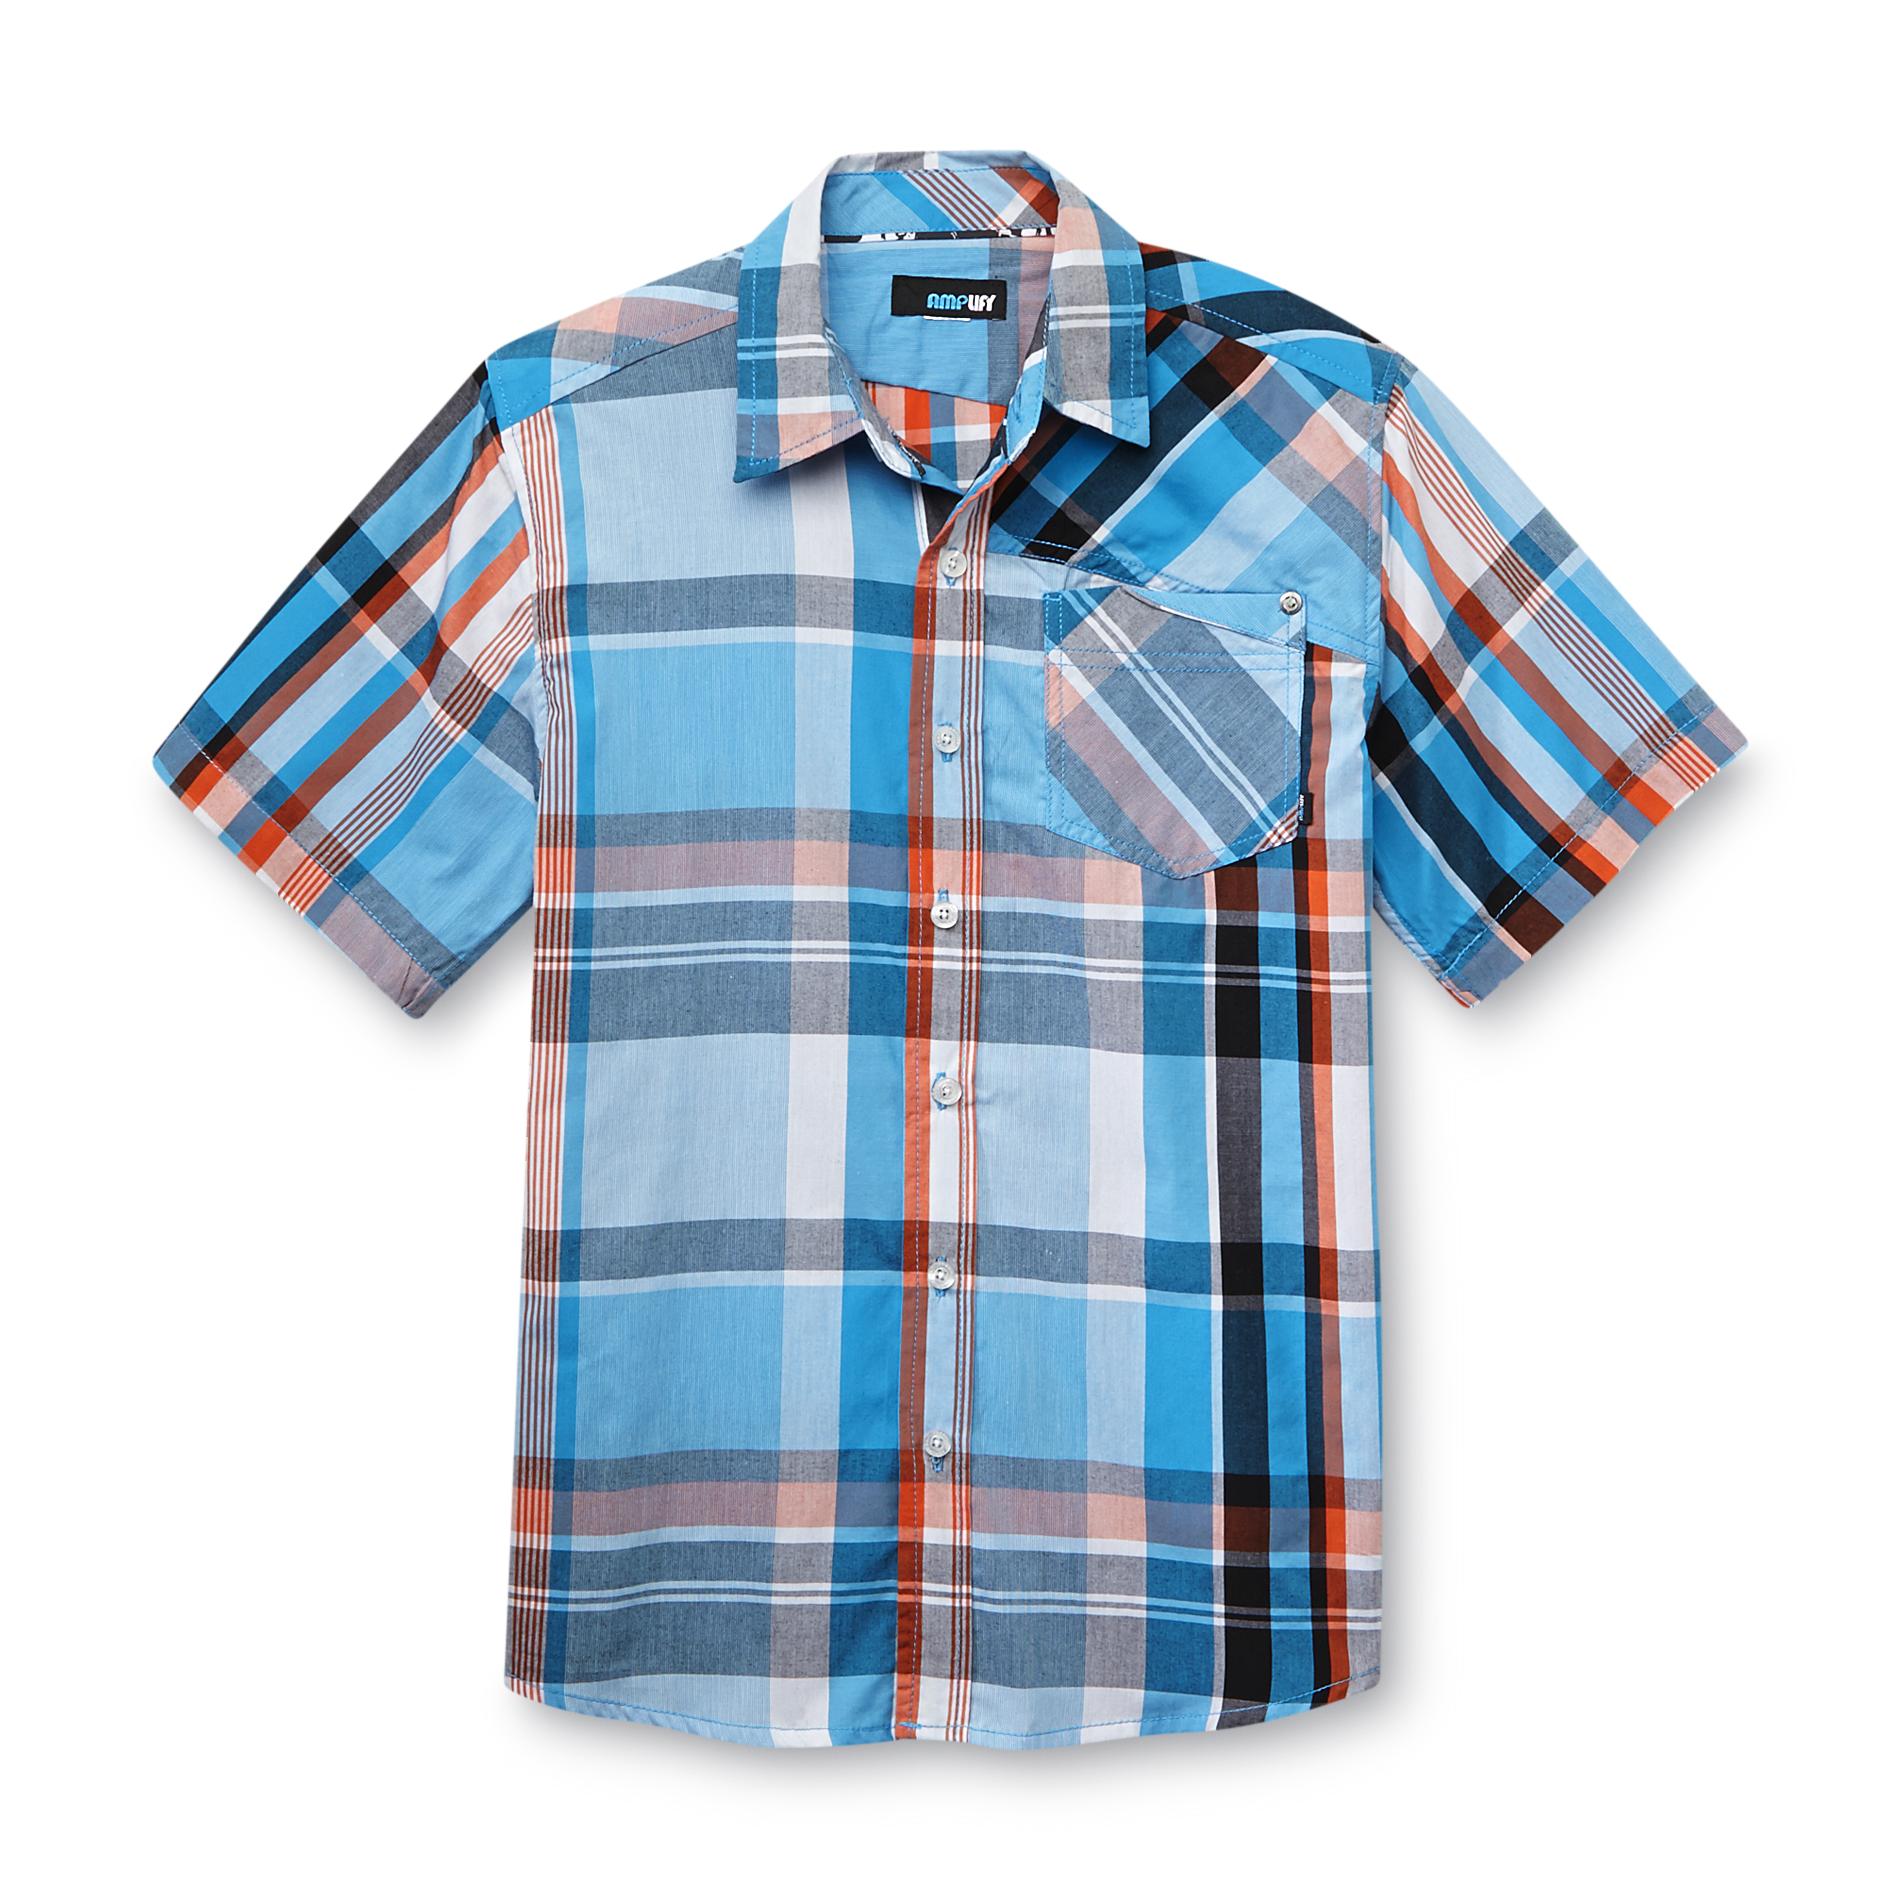 Amplify Boy's Short-Sleeve Shirt - Plaid